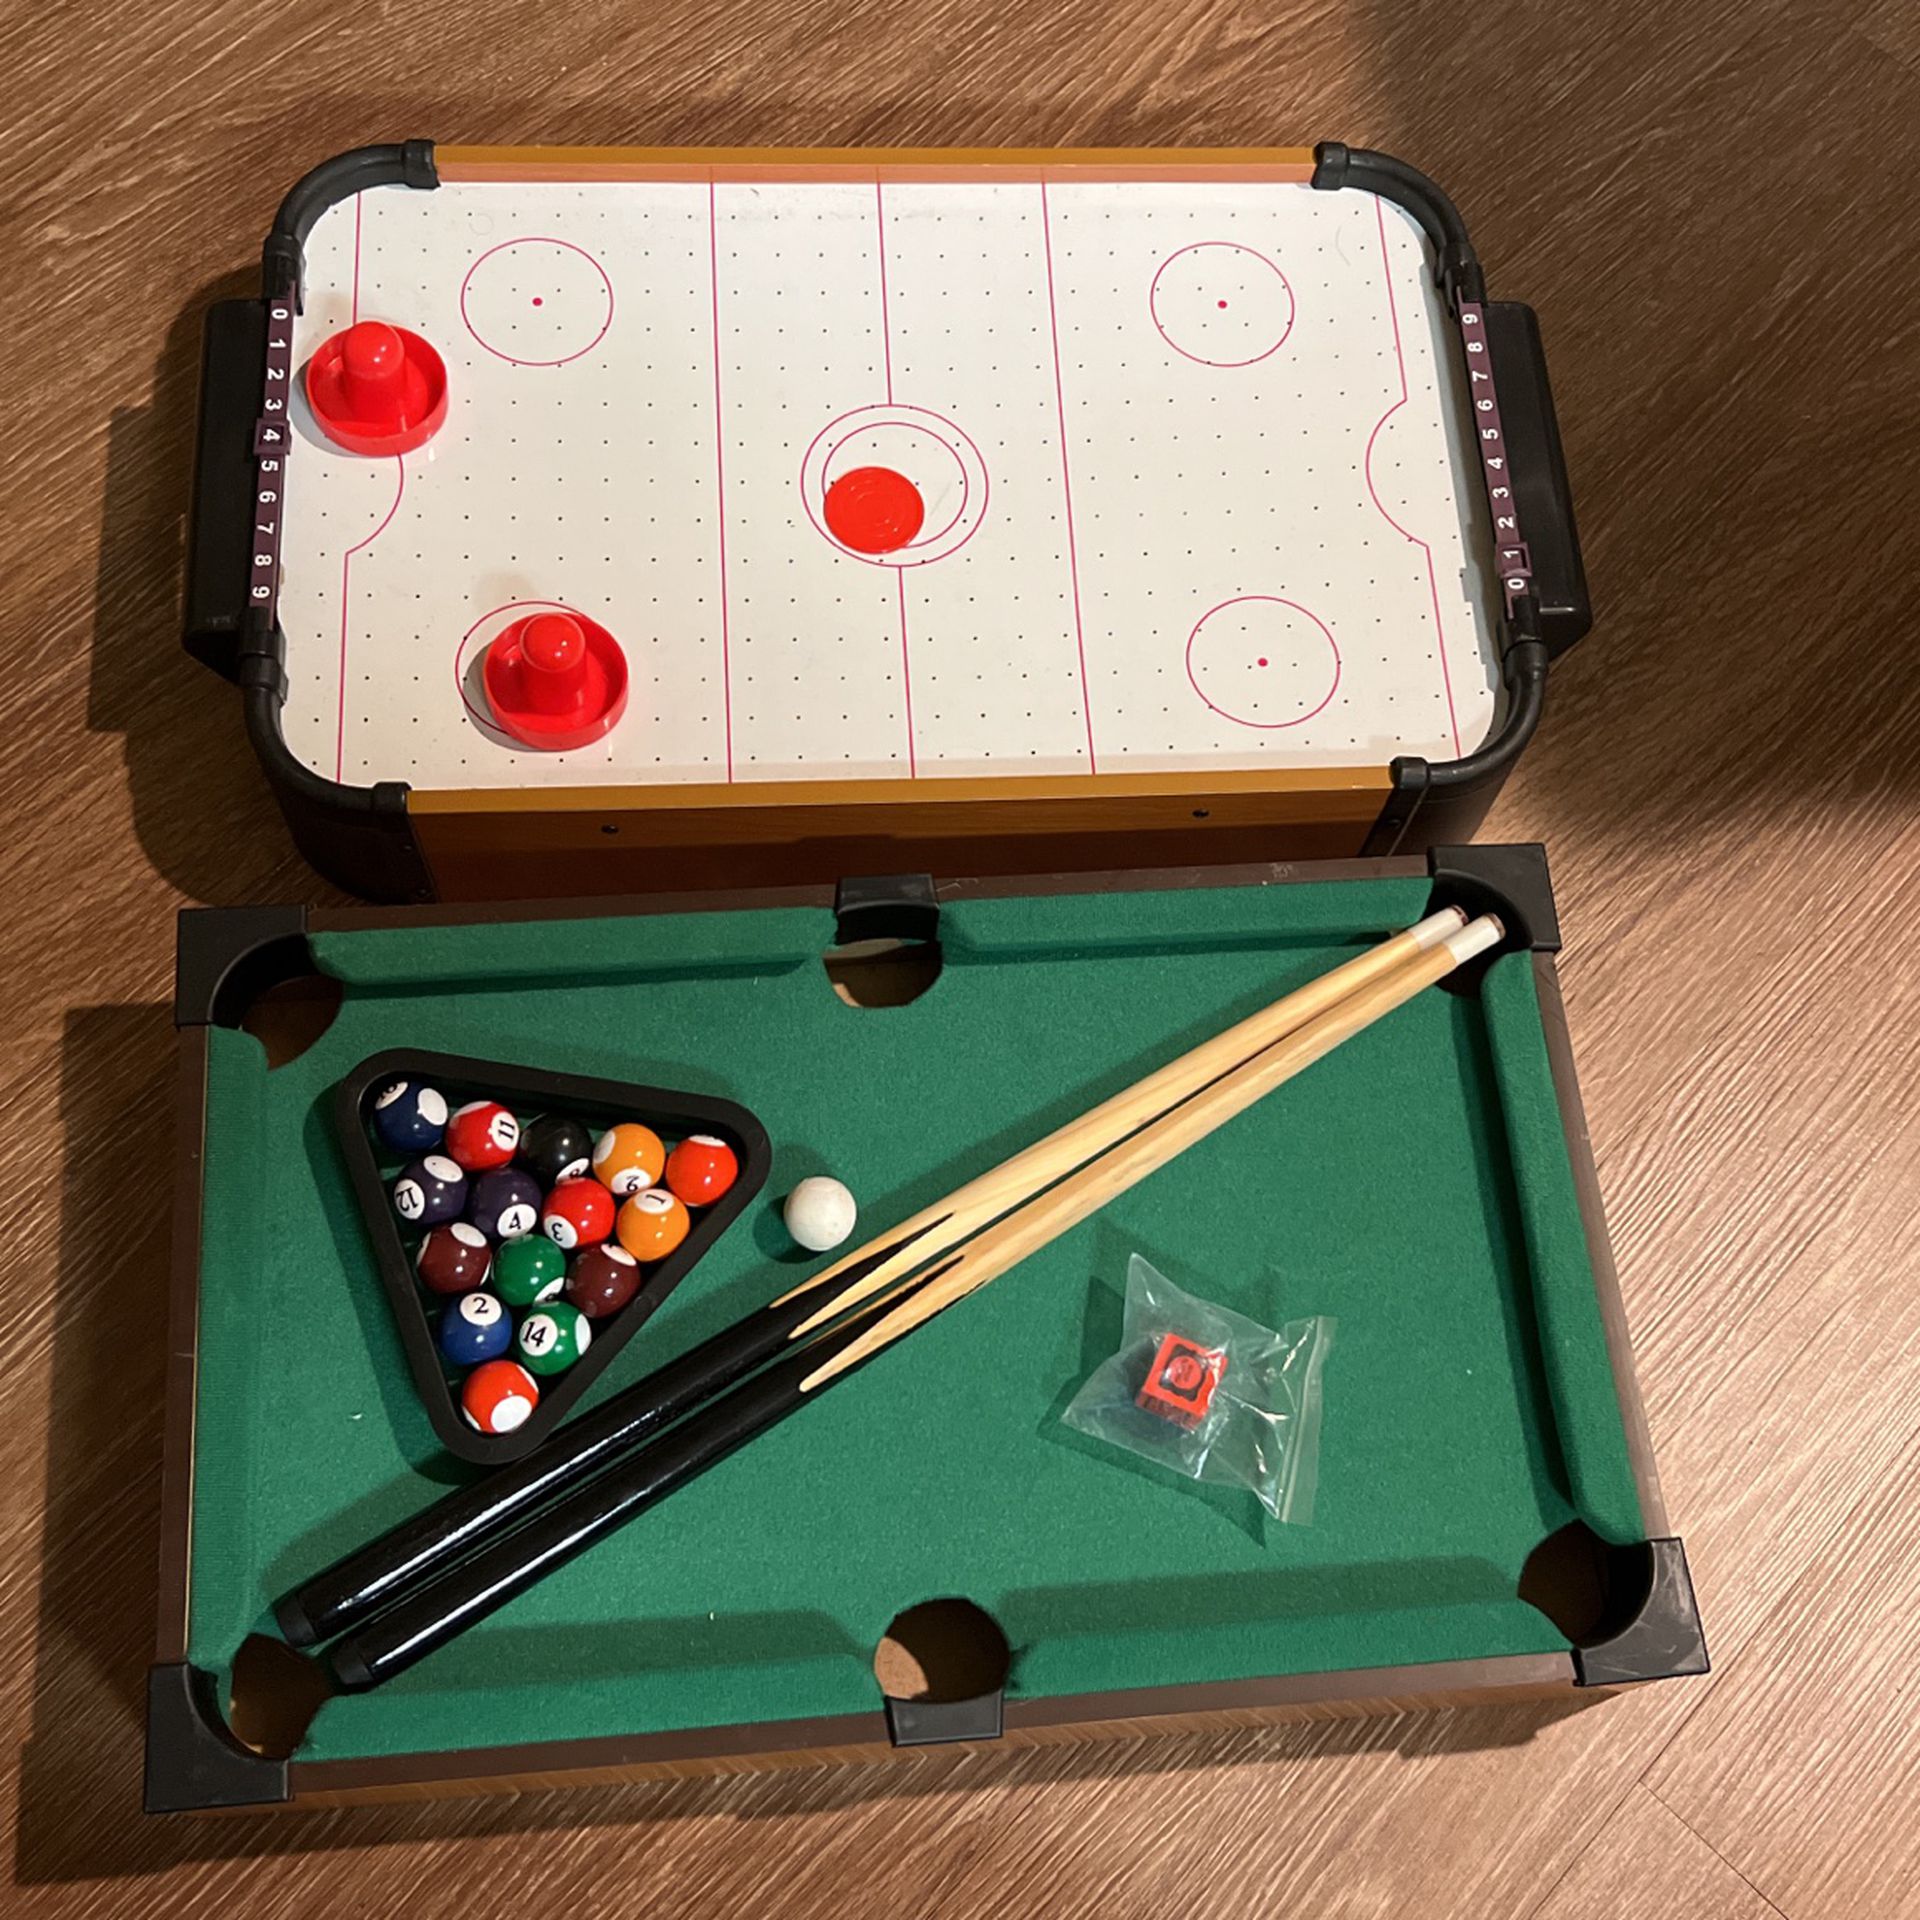 Mini pool And Air Hockey table